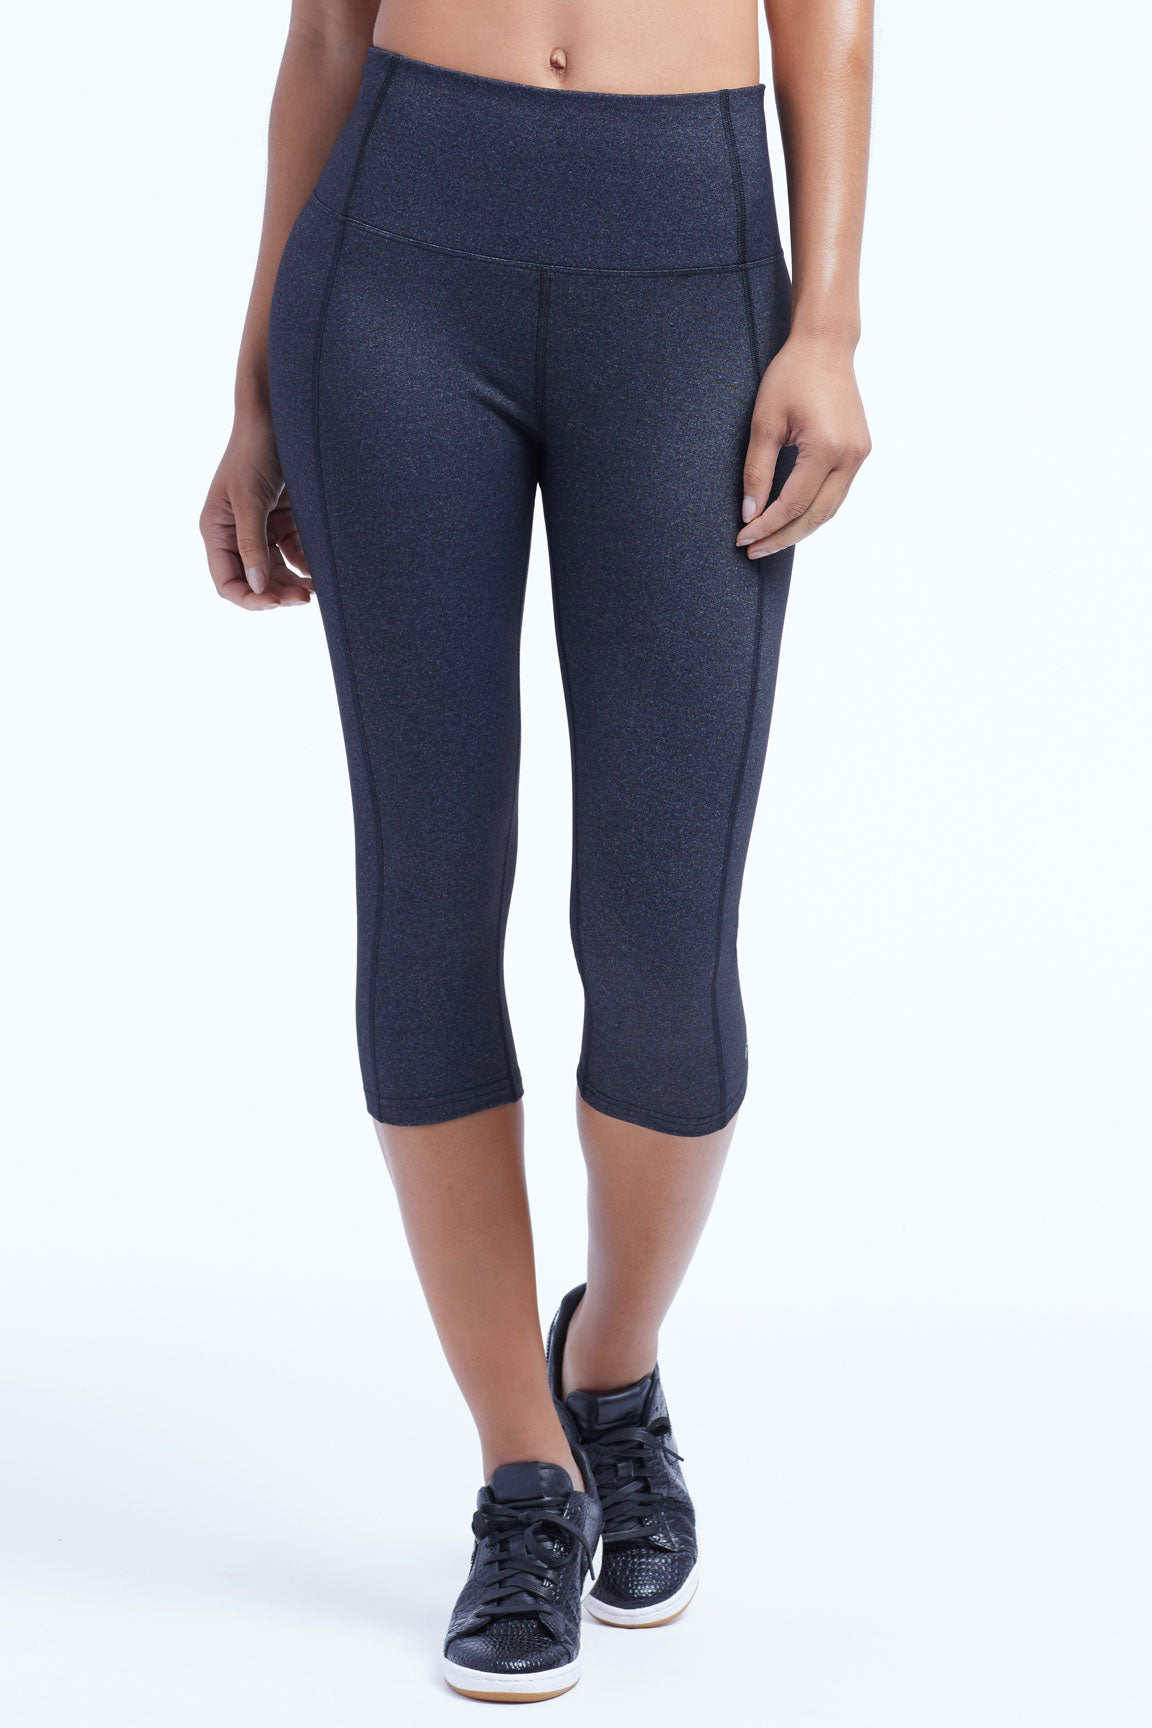 Yoga Capri Leggings for Women High Waisted Belly Control Compression Capris  Solid Color Patchwork Gym 3/4 Legging (Medium, Gray)